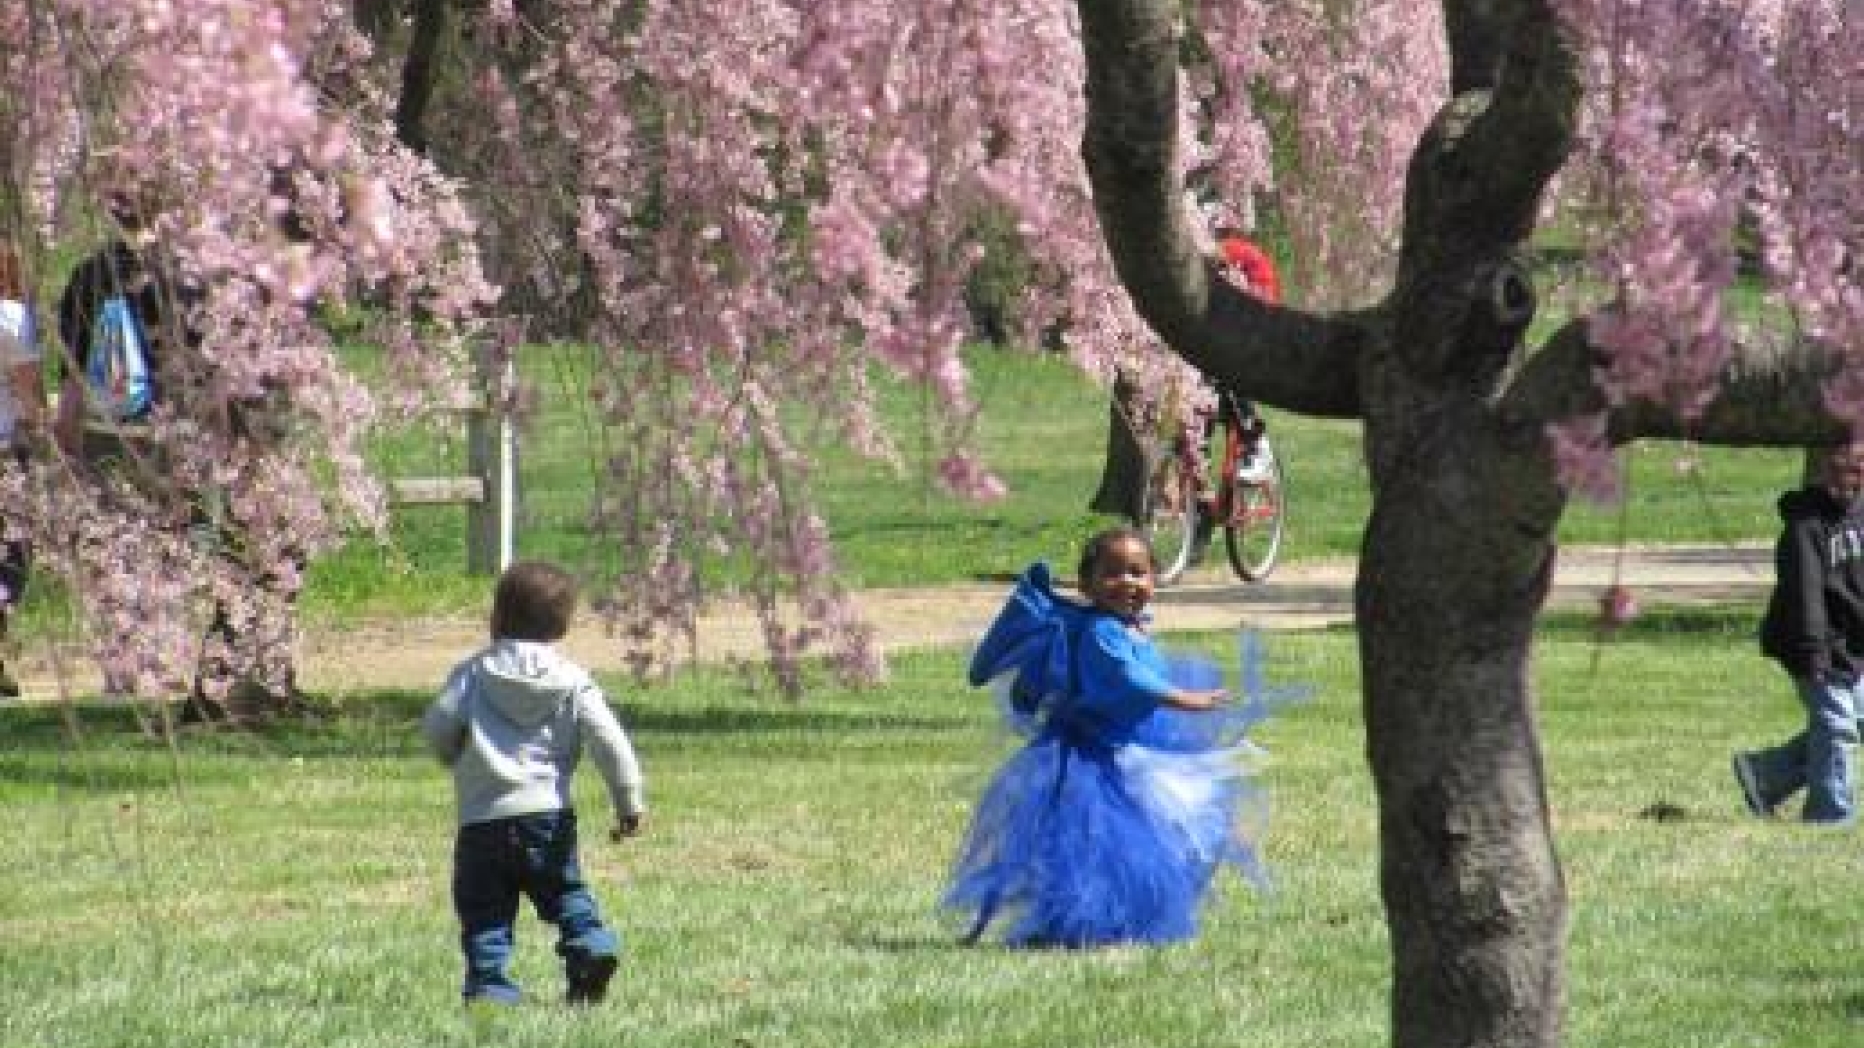 Children playing near a cherry blossom tree